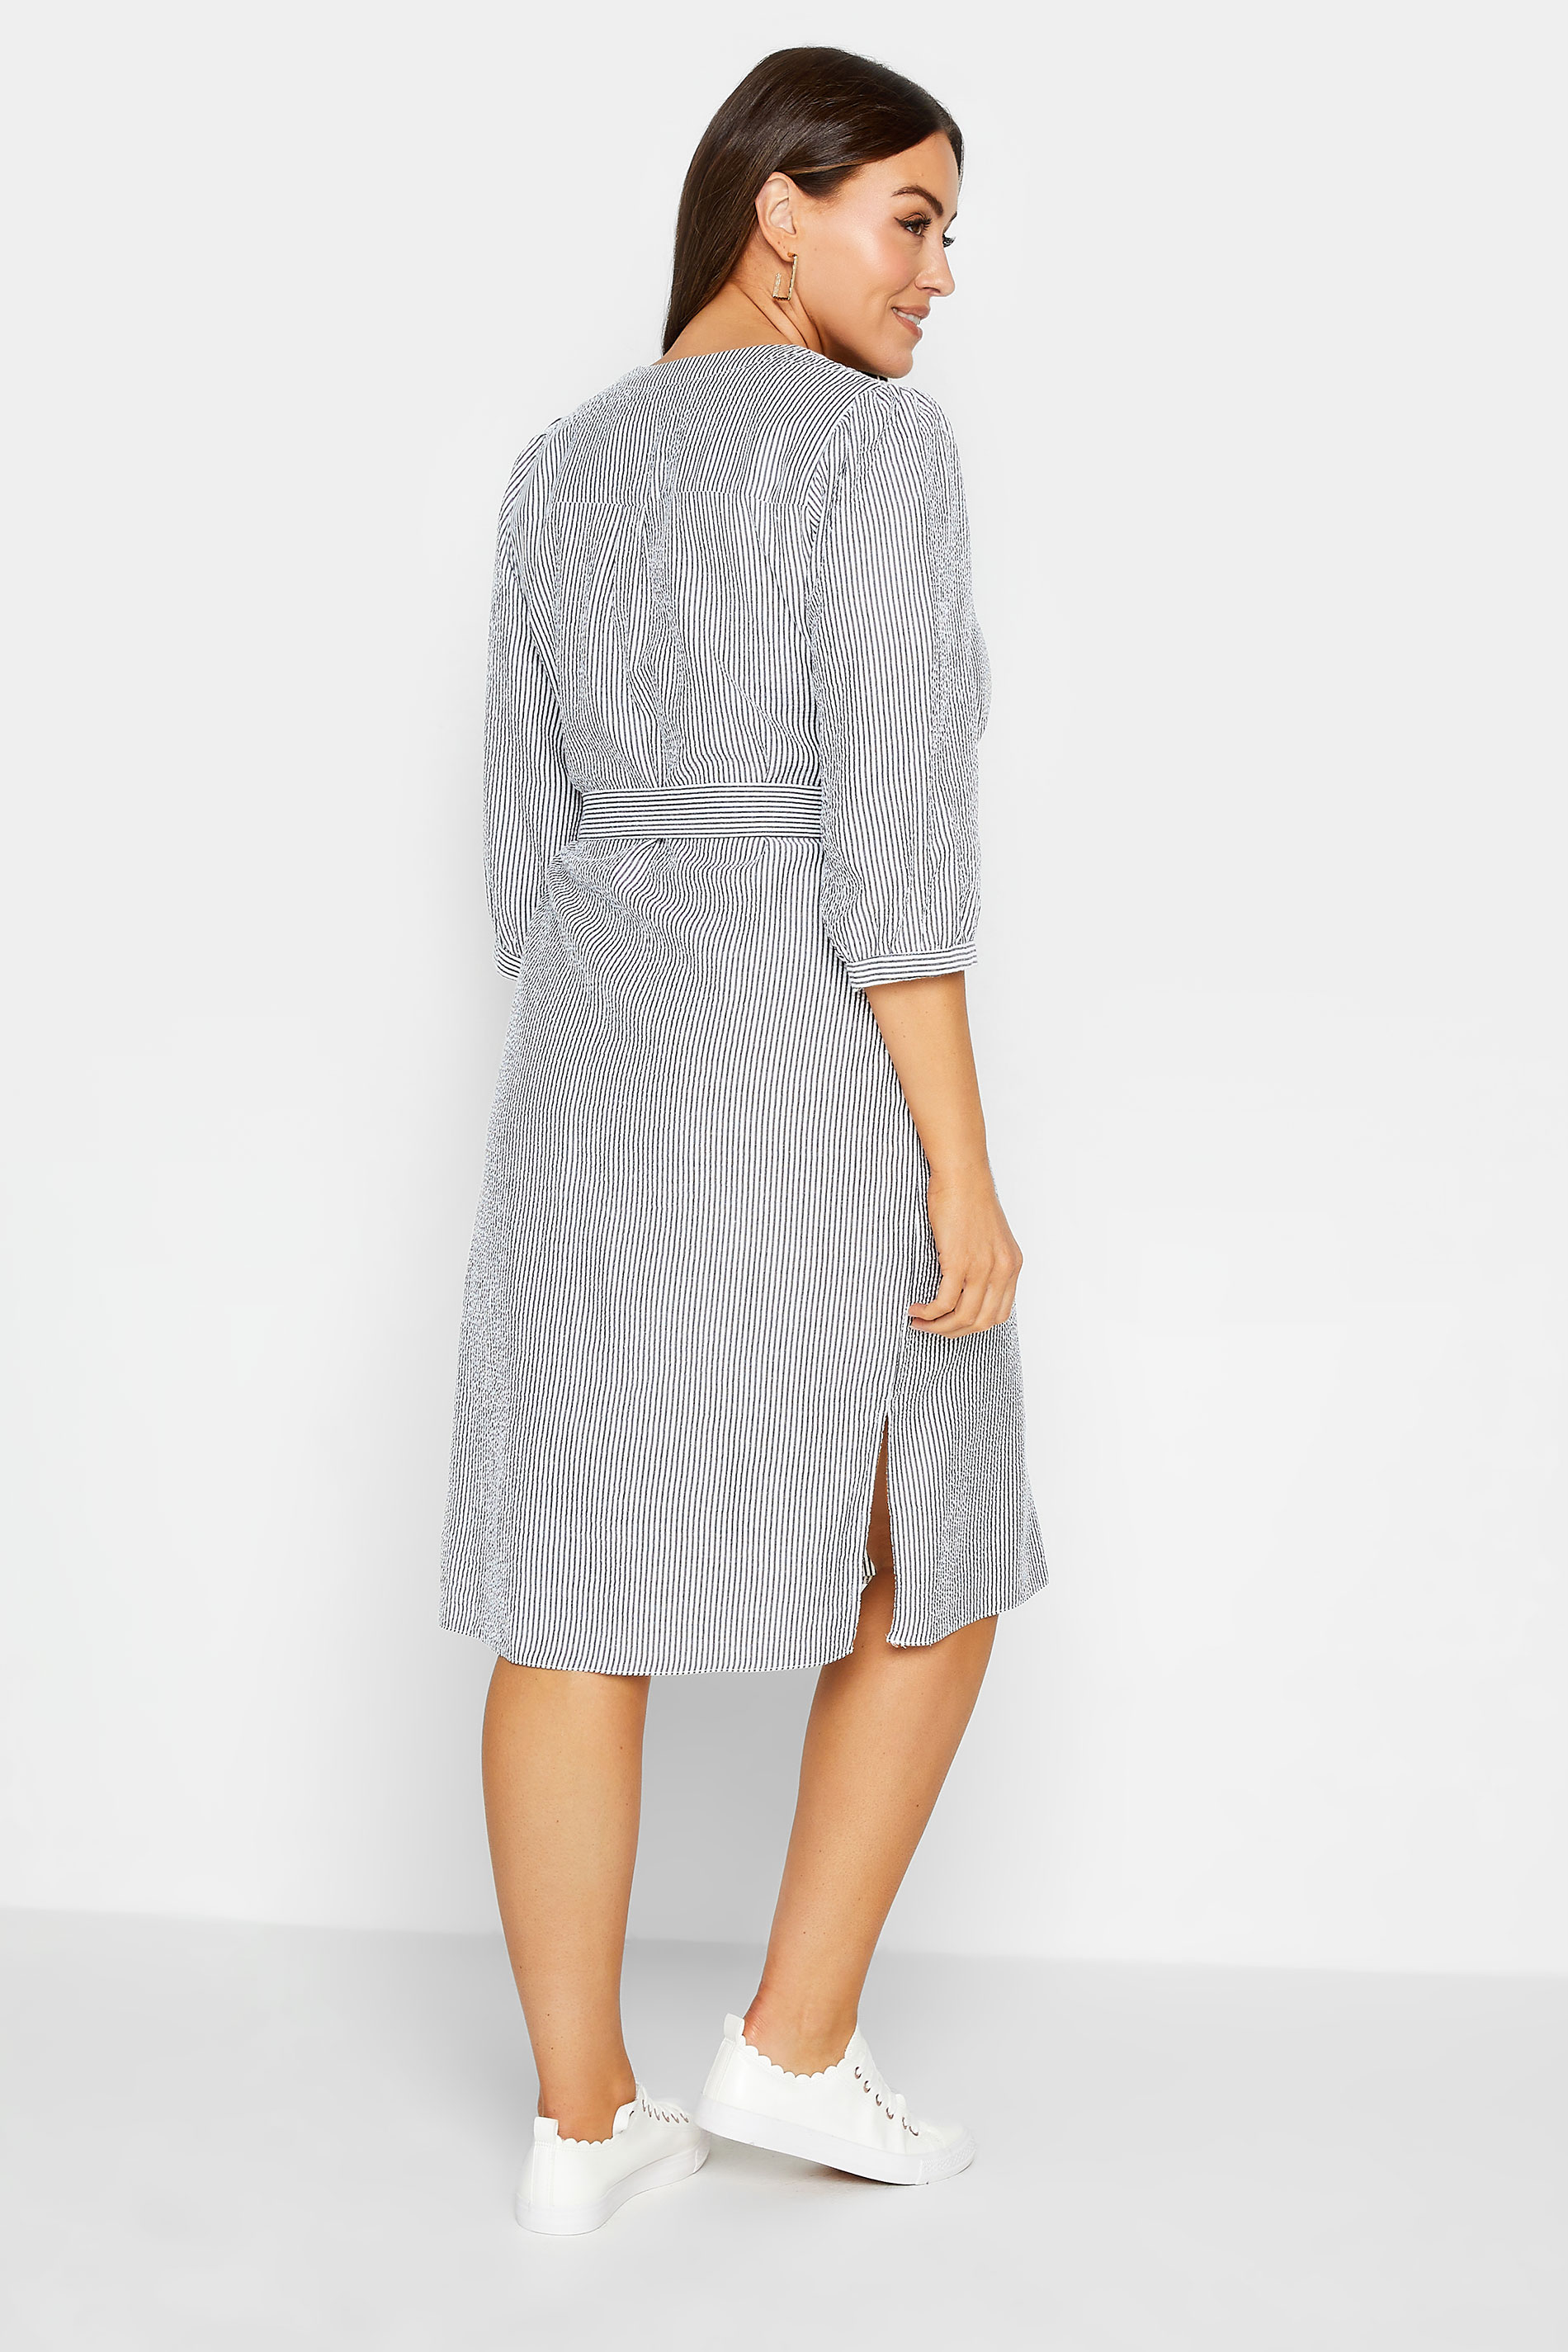 M&Co White & Grey Stripe Print Tie Waist Tunic Dress | M&Co 3